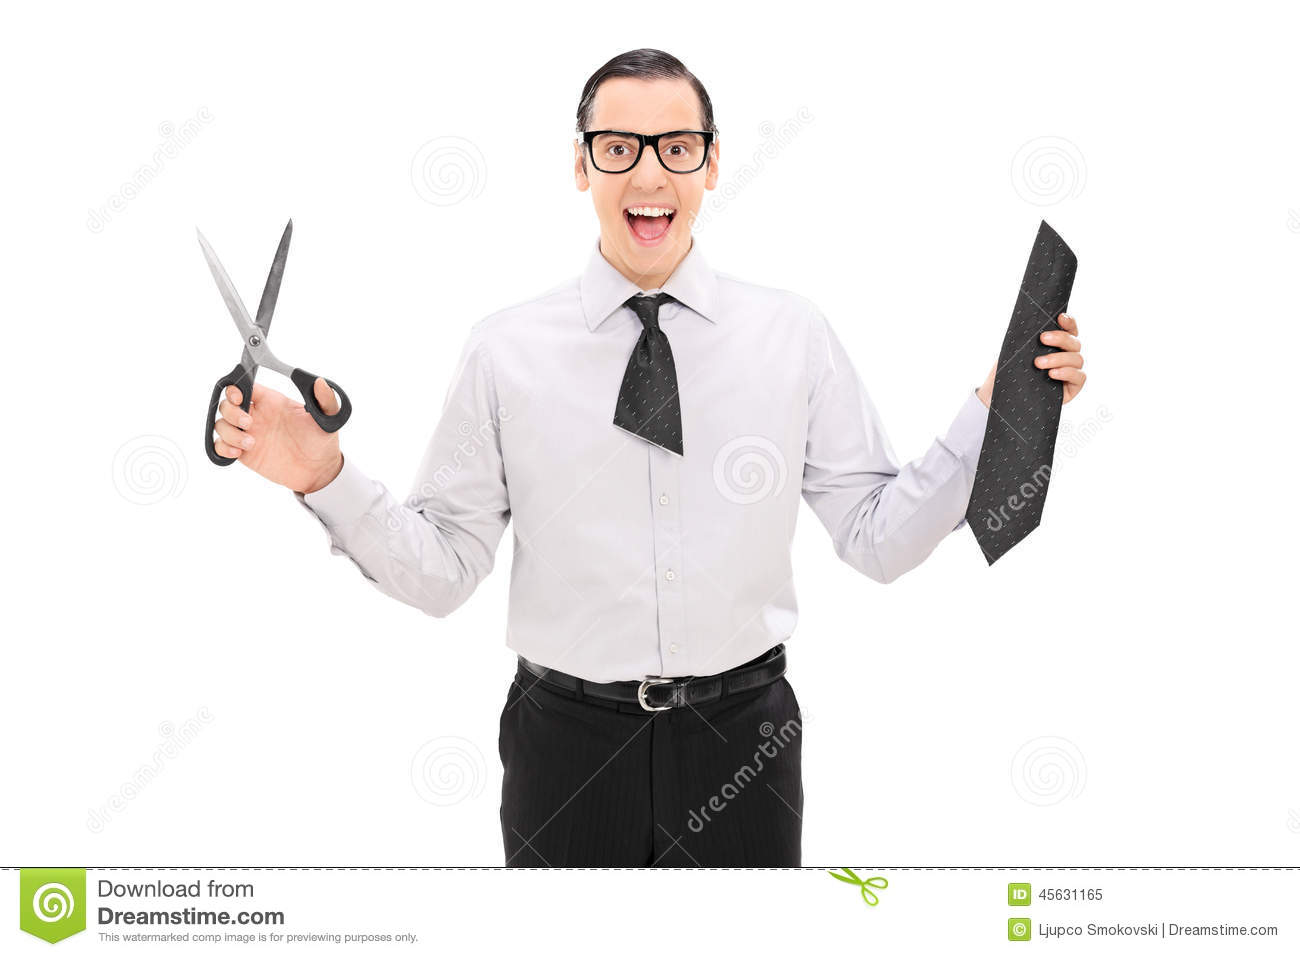 overjoyed-man-cut-tie-holding-scissors-isolated-white-background-45631165.jpg